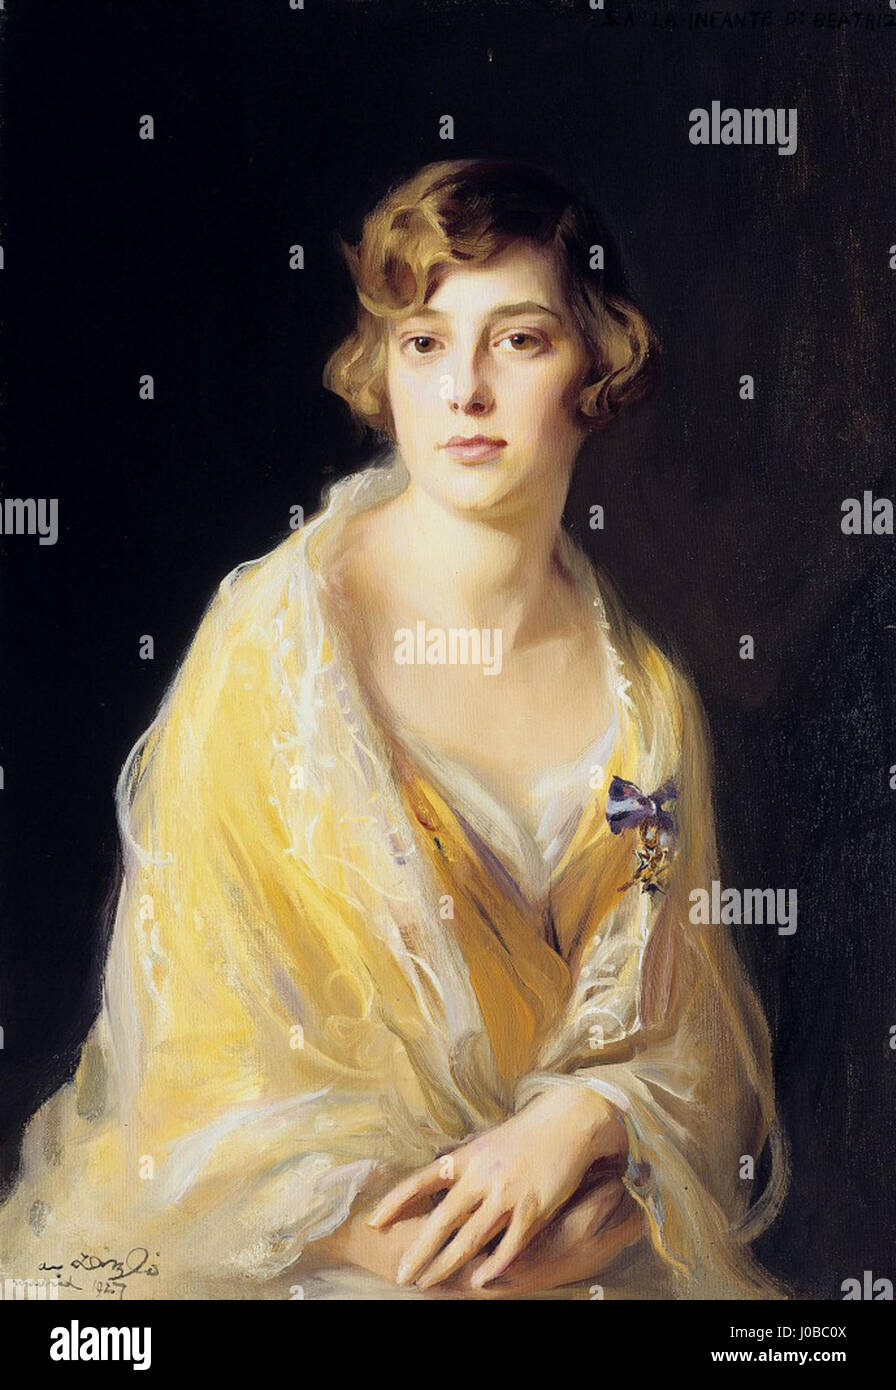 The Infanta doña Beatriz de Borbón y Battenberg; daughter of Alfonso XIII Stock Photo